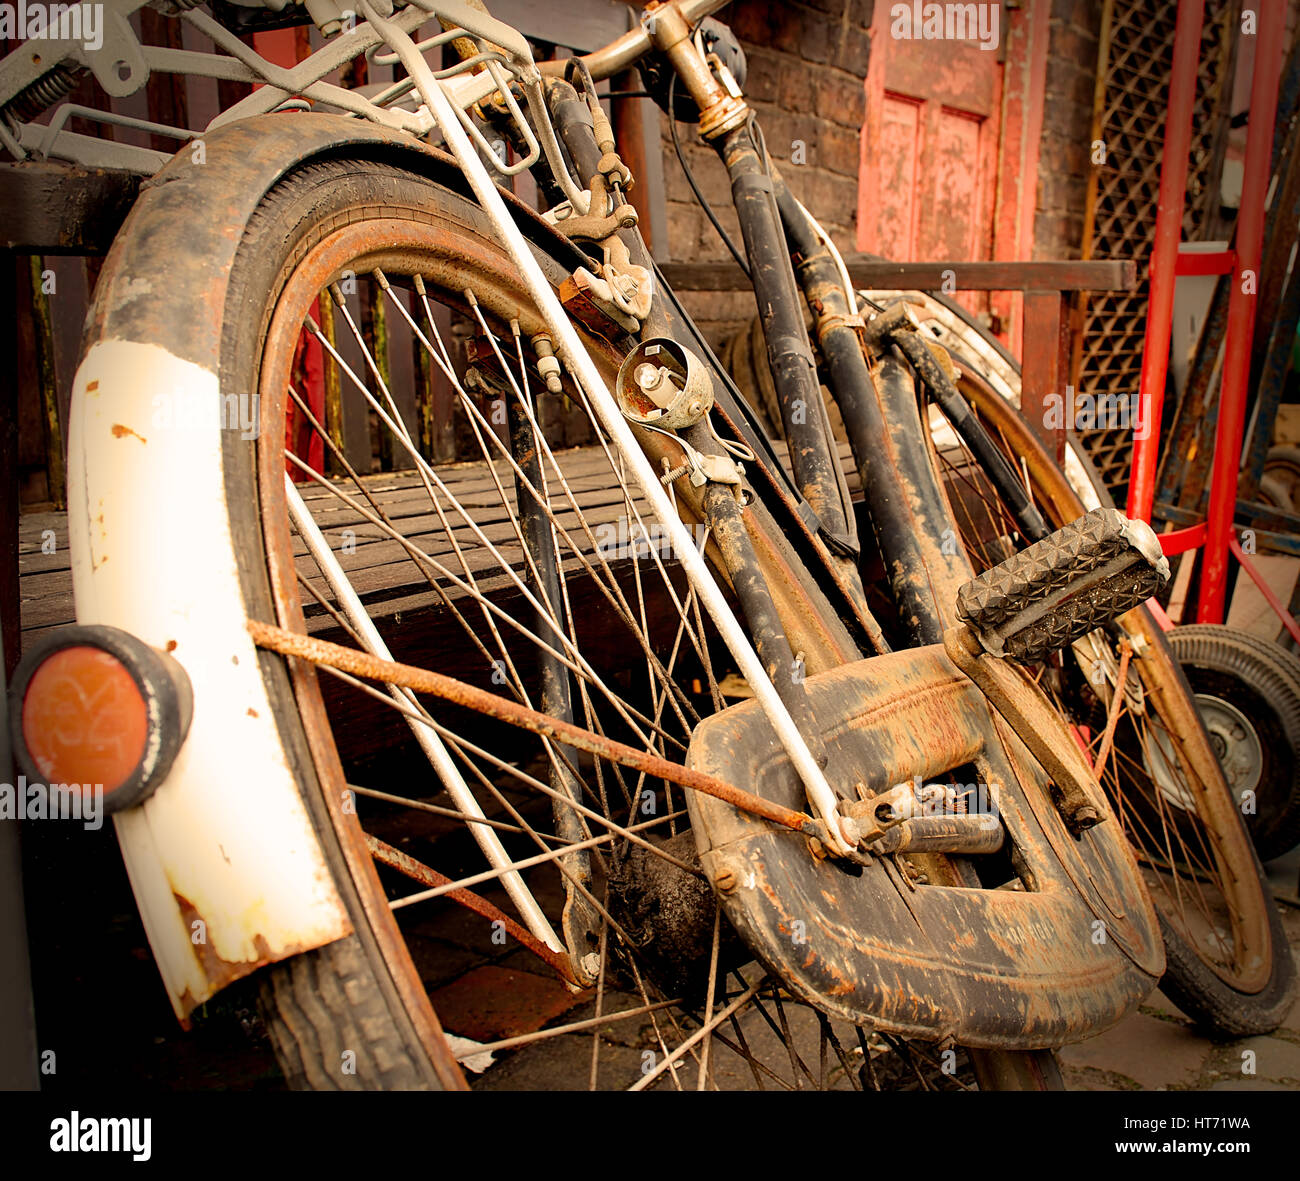 Old rusty bike. Stock Photo